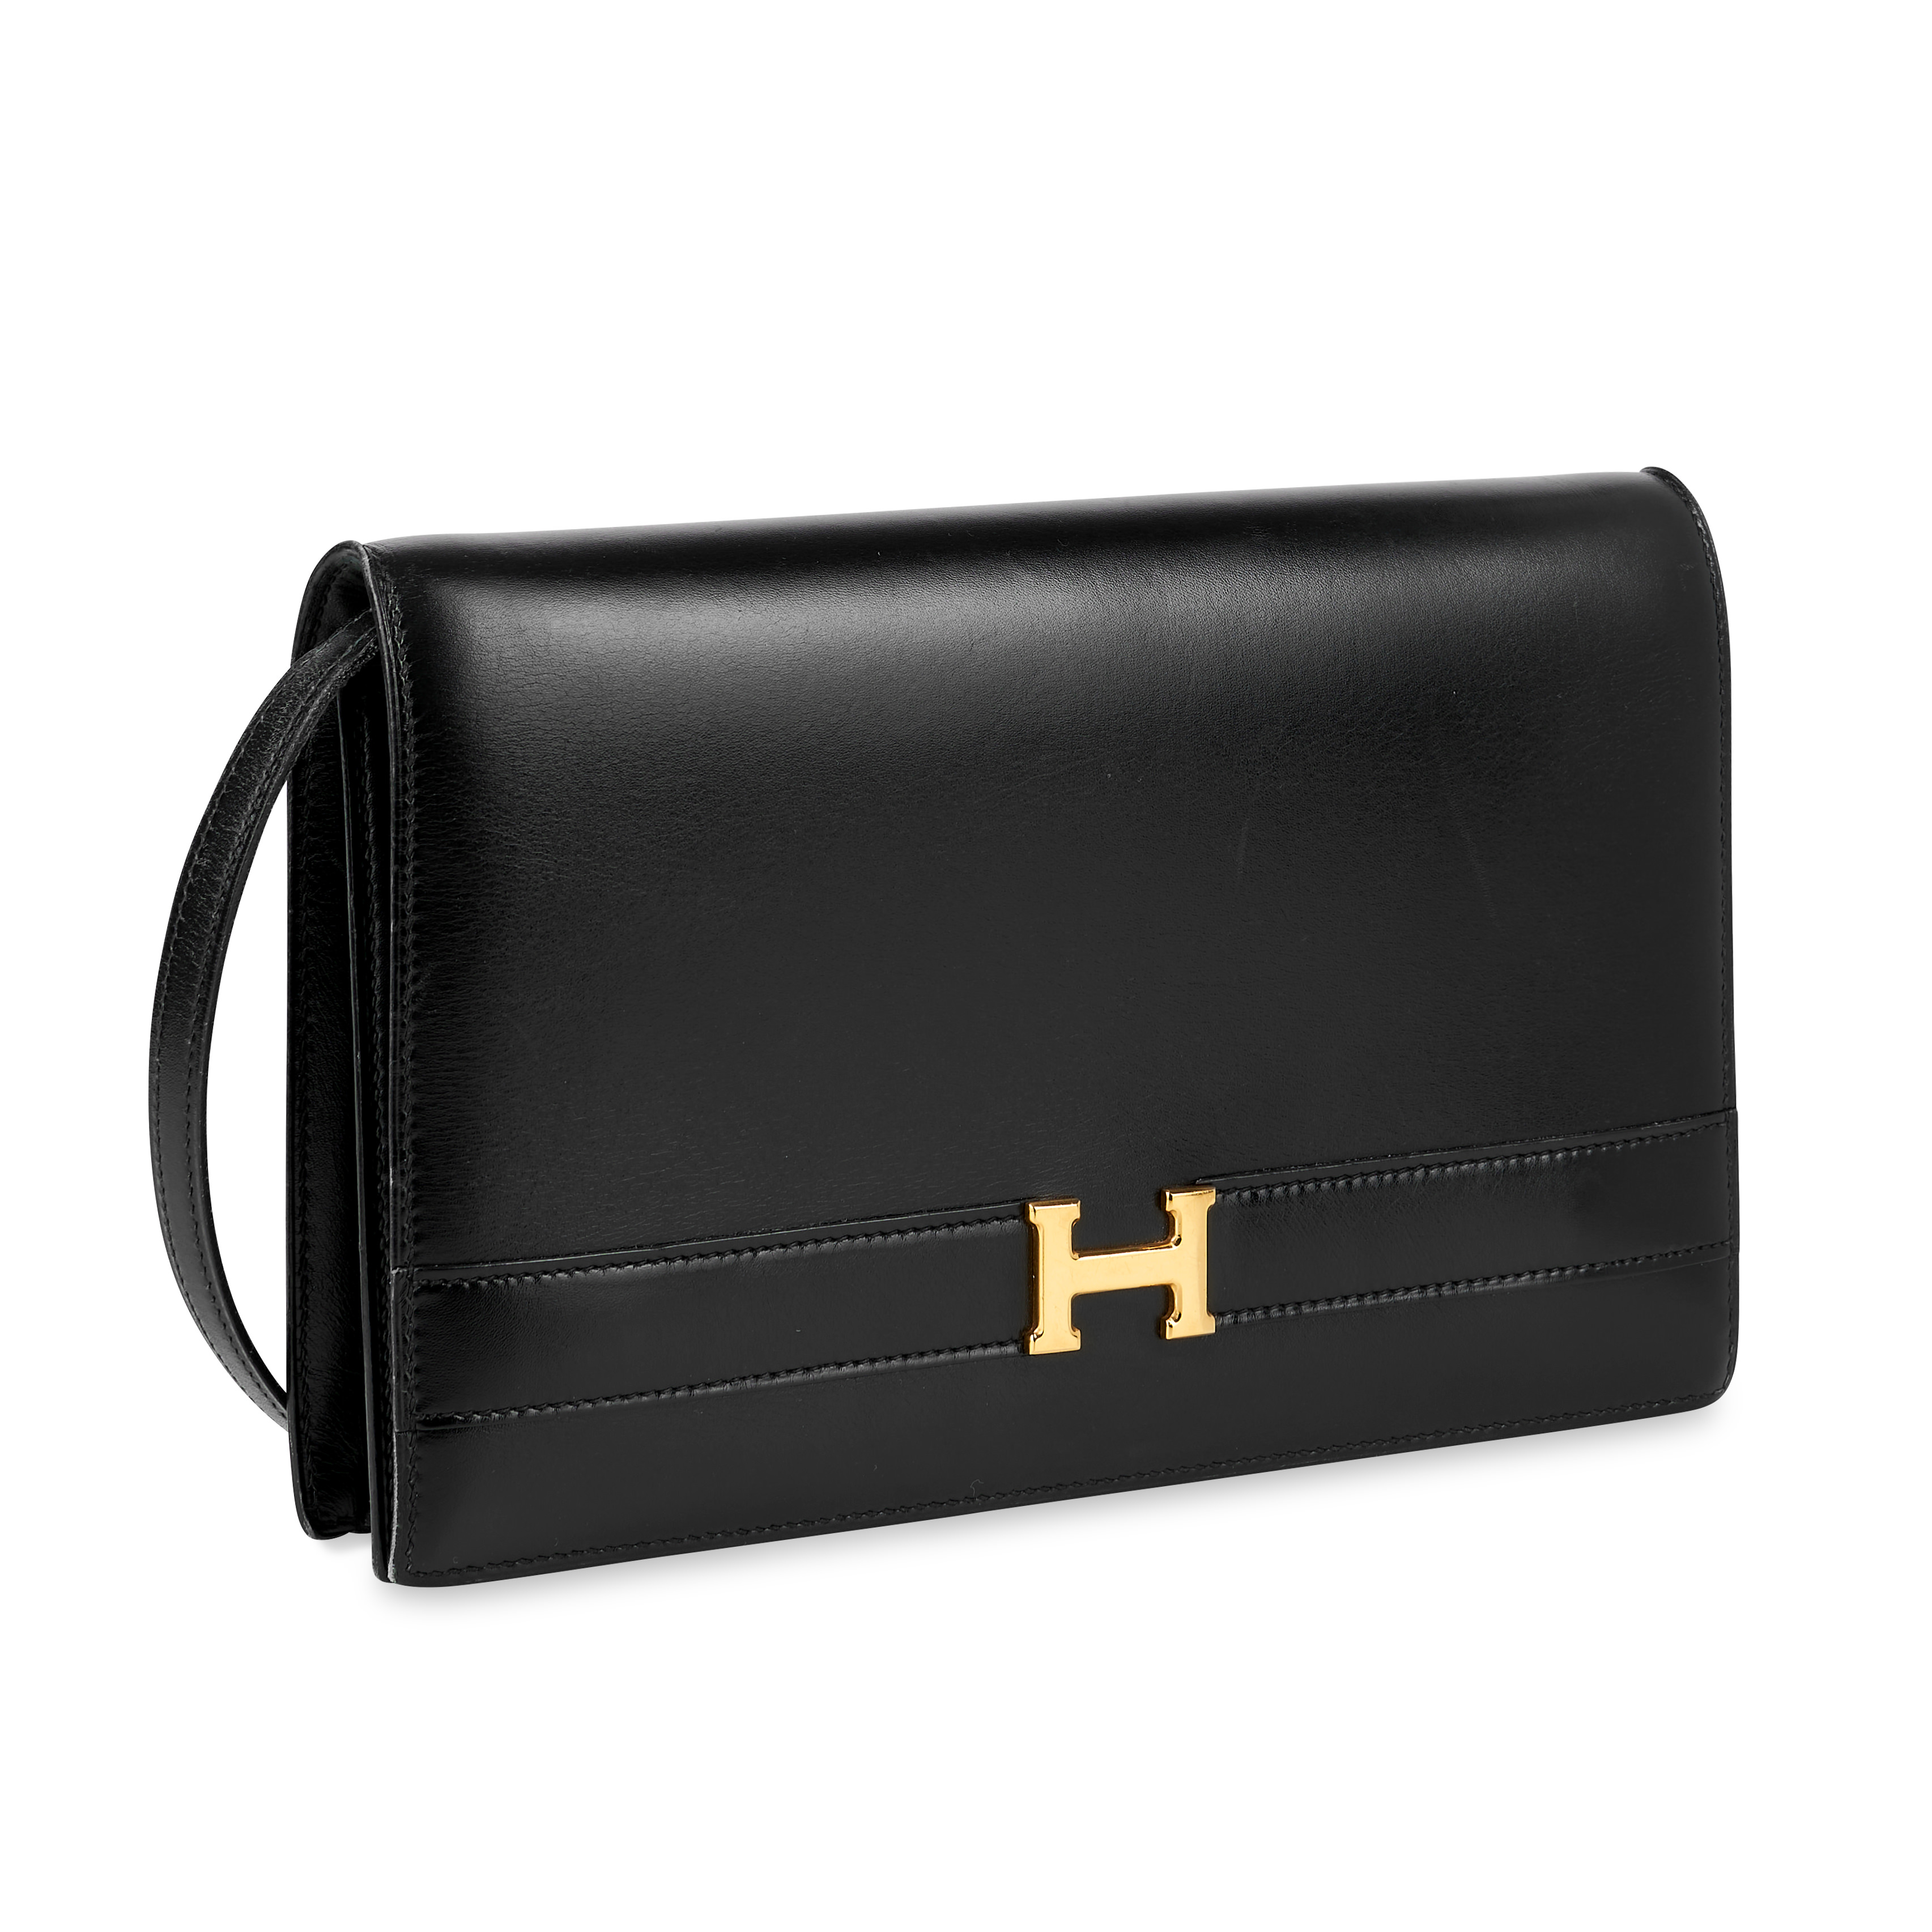 HERMES VINTAGE BLACK BOX LEATHER ANNIE CLUTCH BAG Condition grade B-.  24cm long, 15cm high. Sh... - Image 2 of 5